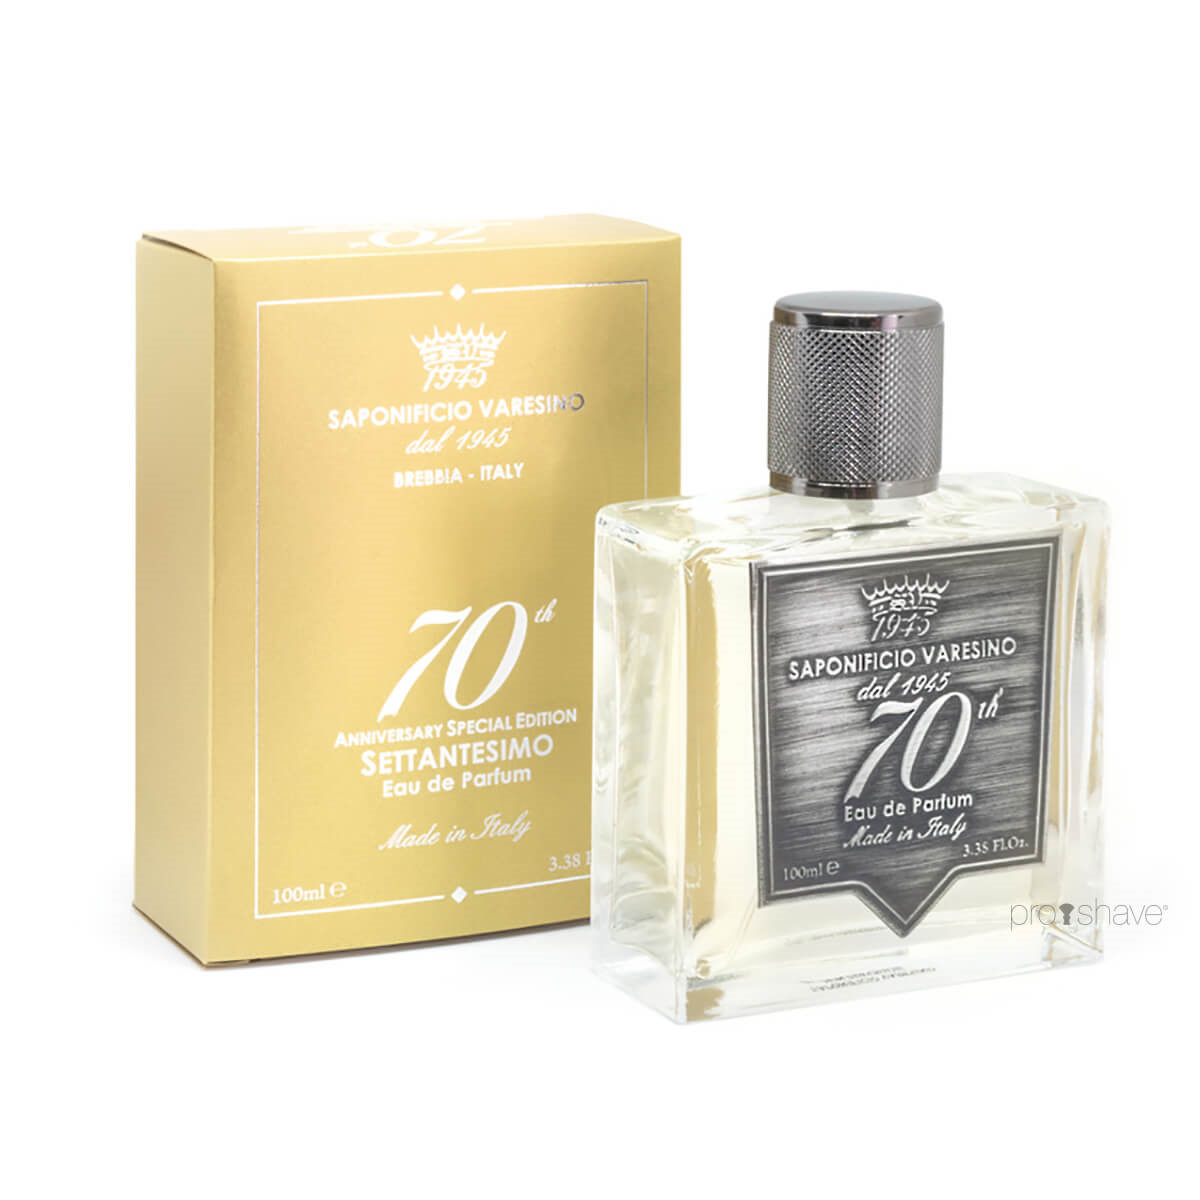 Billede af Saponificio Varesino Eau de Parfum, 70th Anniversary, 100 ml.